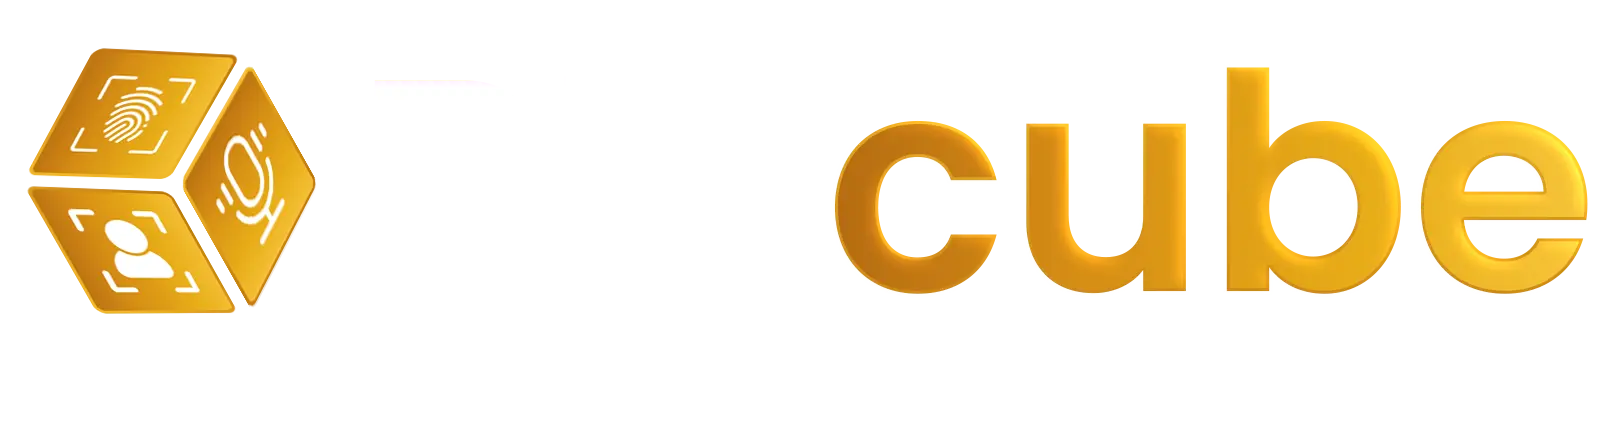 biocube logo